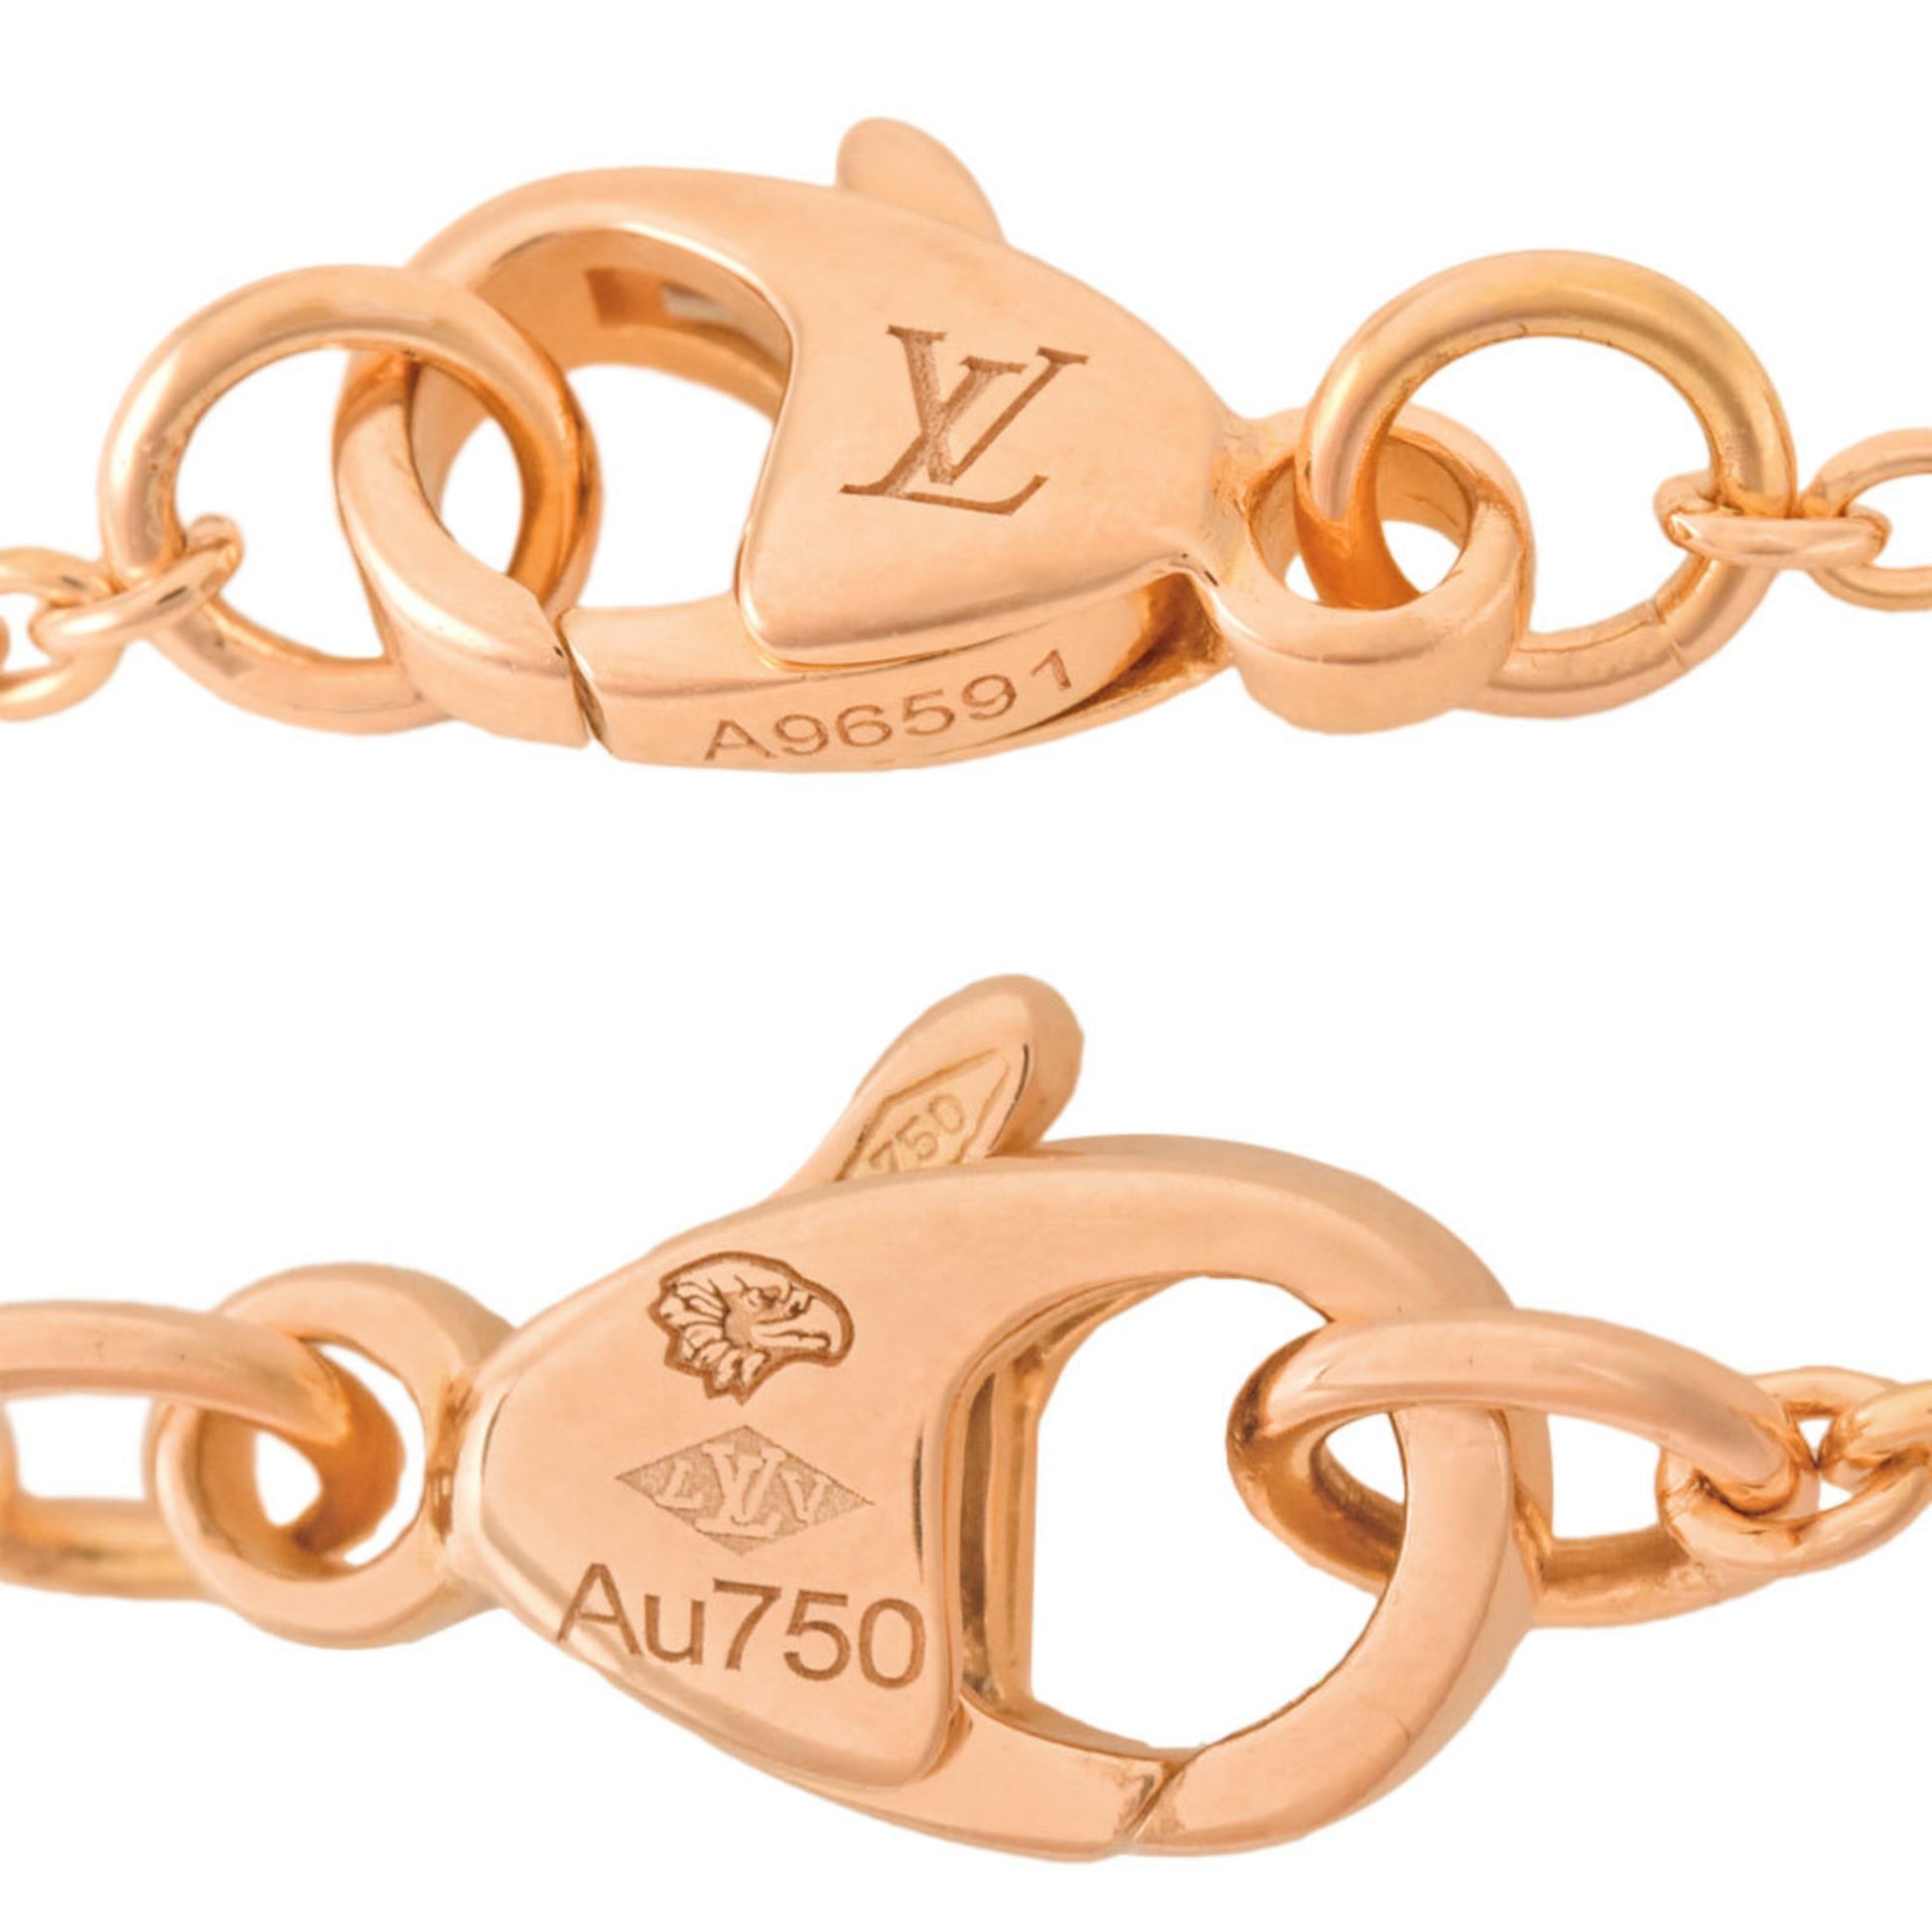 Louis Vuitton Medallion Empreinte Necklace Gold Q93823 18K Yellow Gold